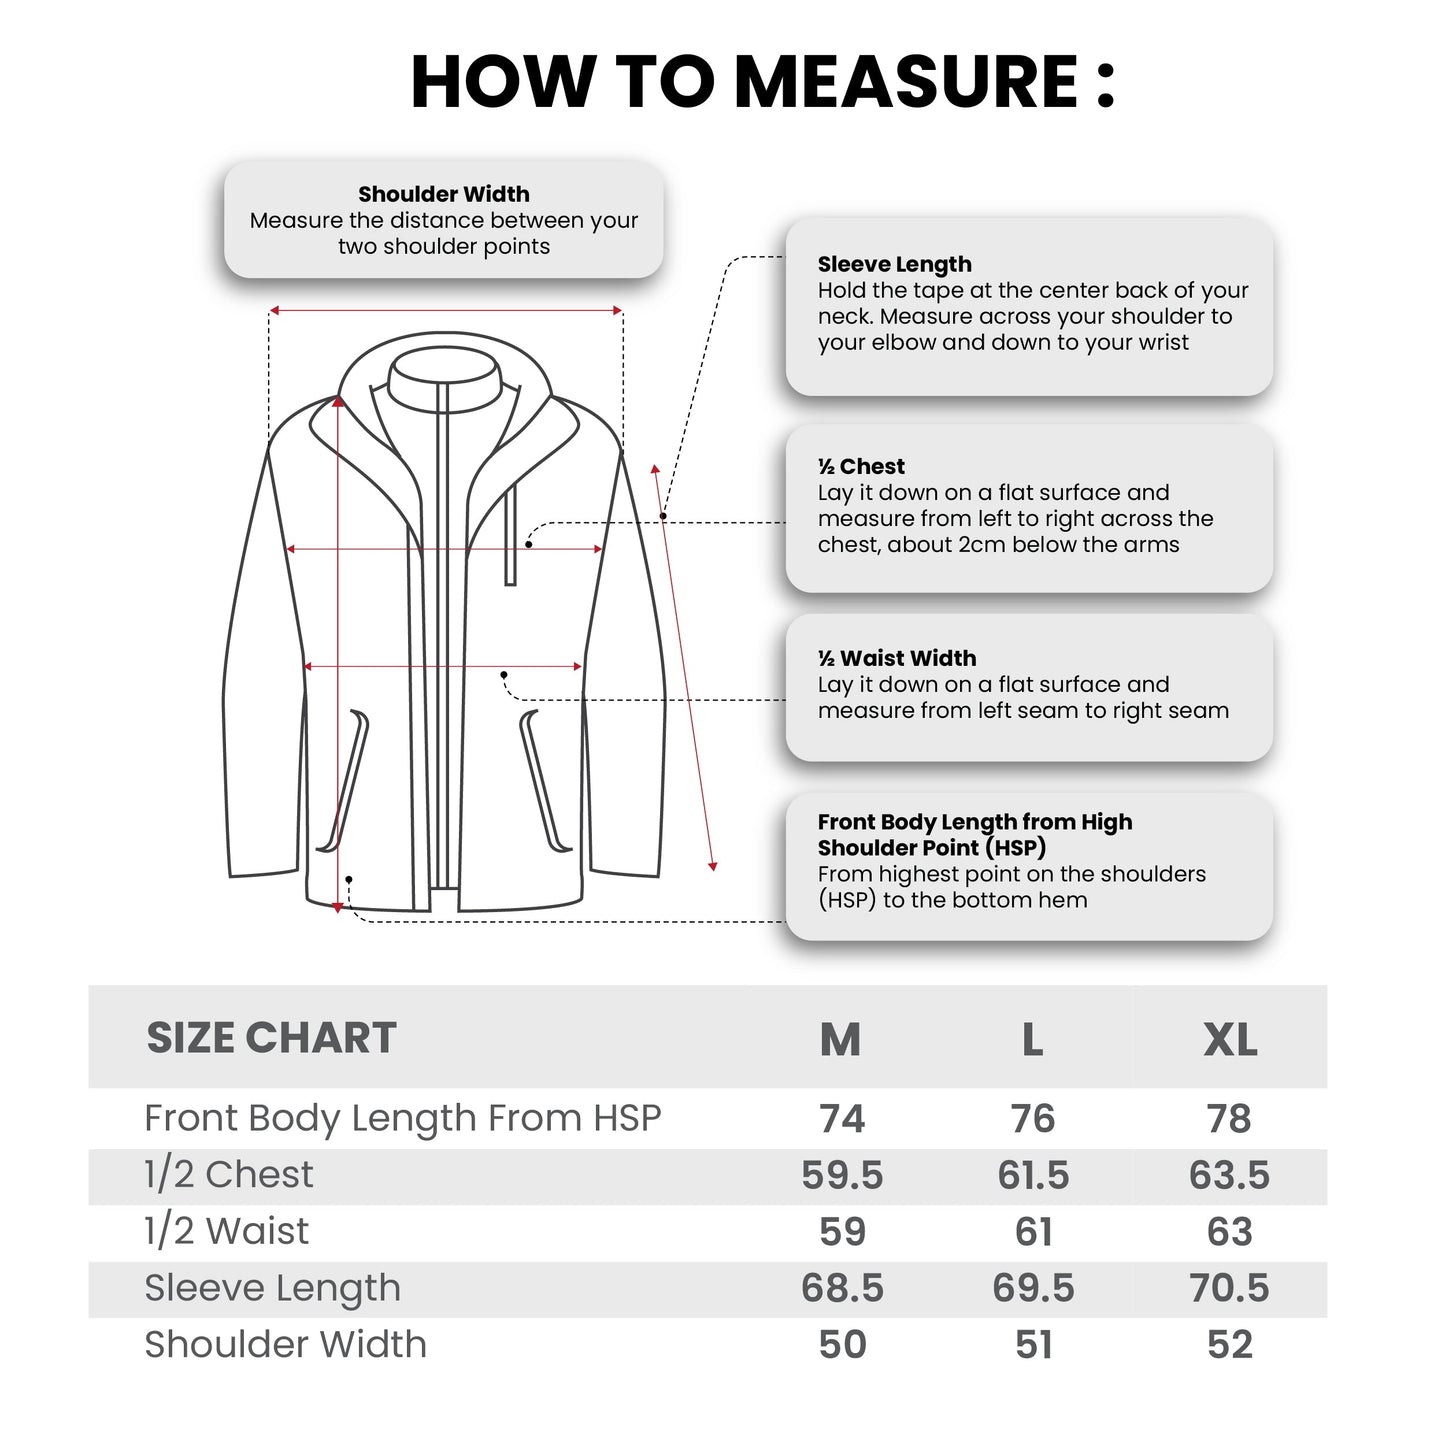 Men's Systems Jacket With Removable Fleece Liner - Regular